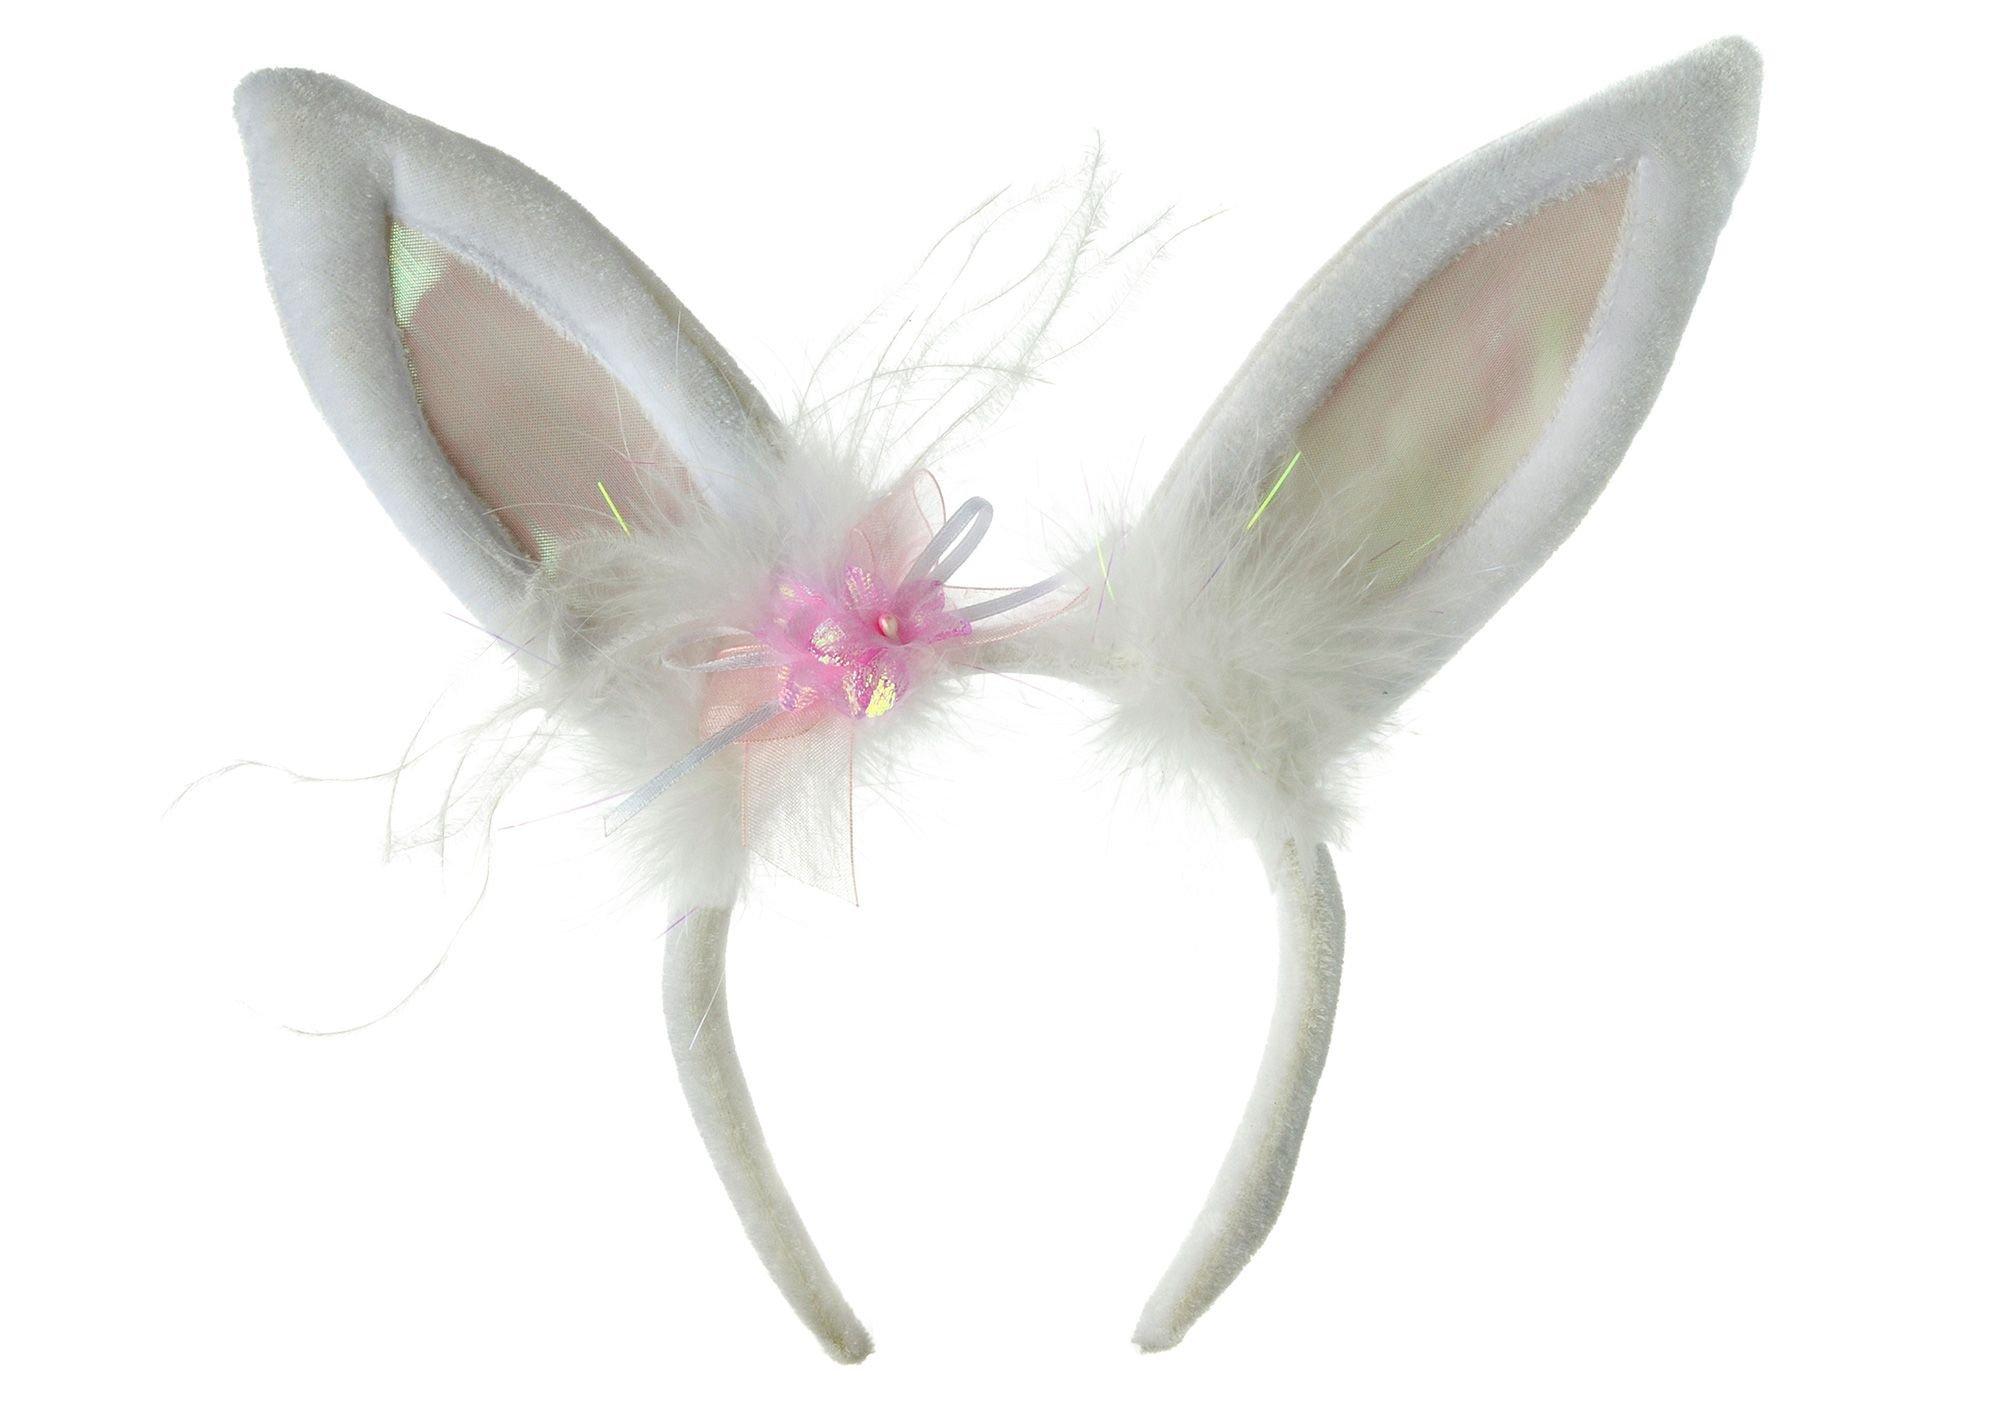 Black Marabou Bunny Ears